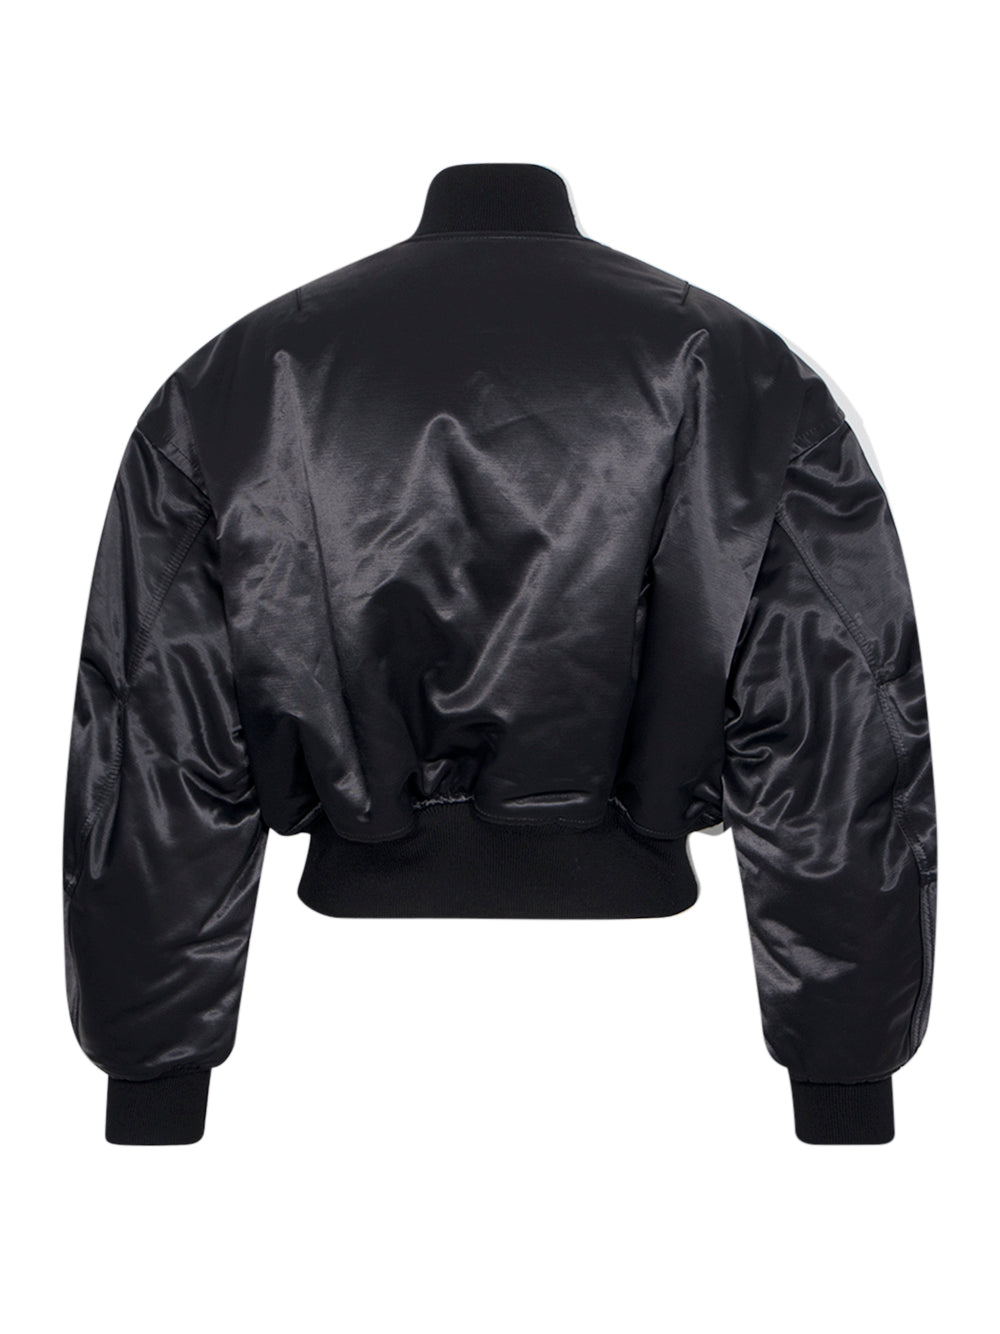 Bomber Jacket With Knit Combo And Slanted Pockets (Black)